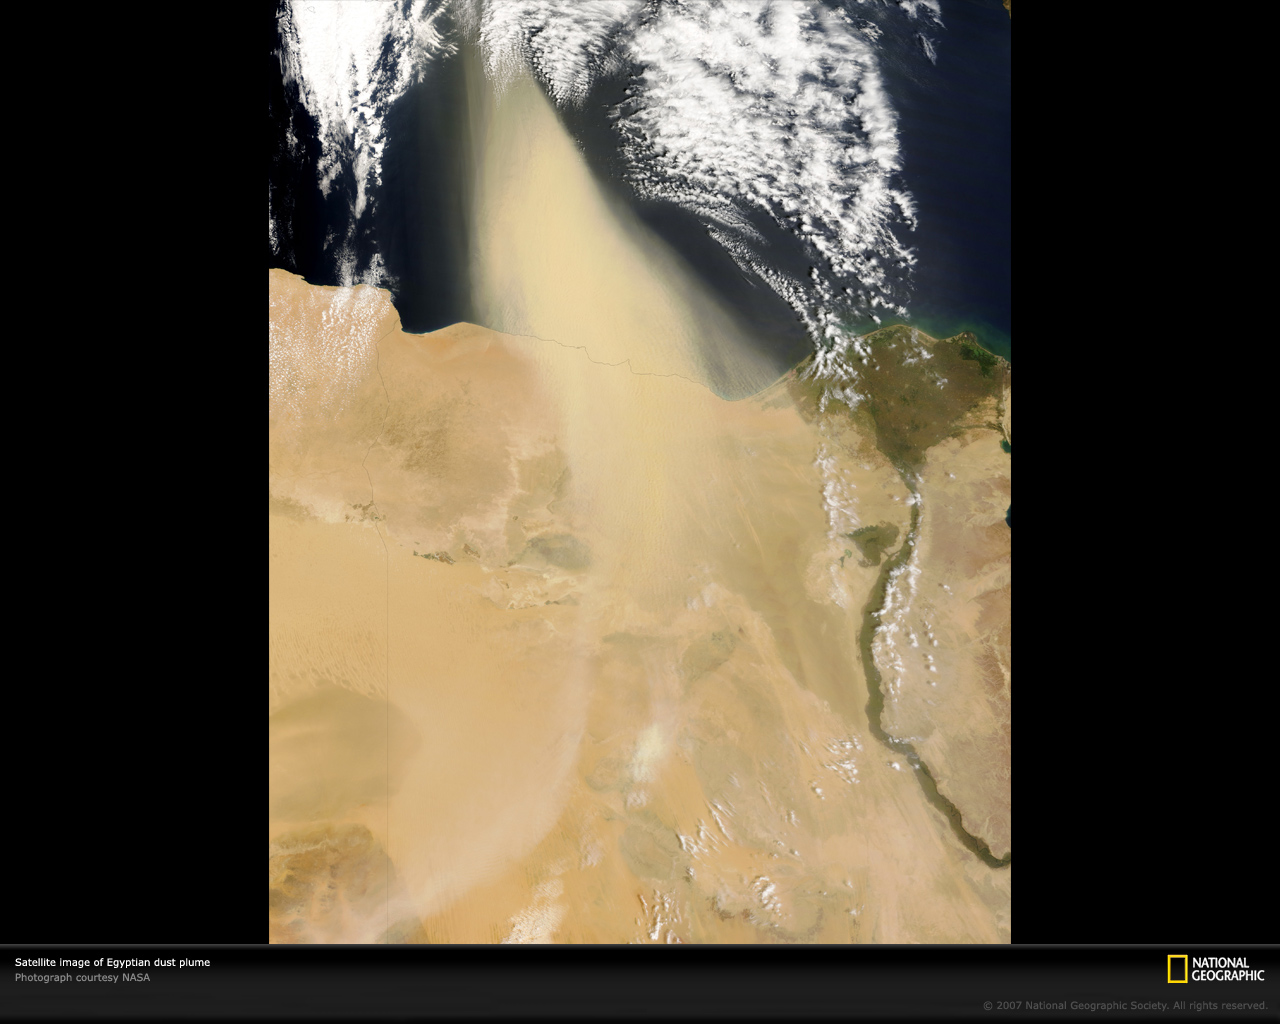 egyptian-dust-plume-17652-xl.jpg